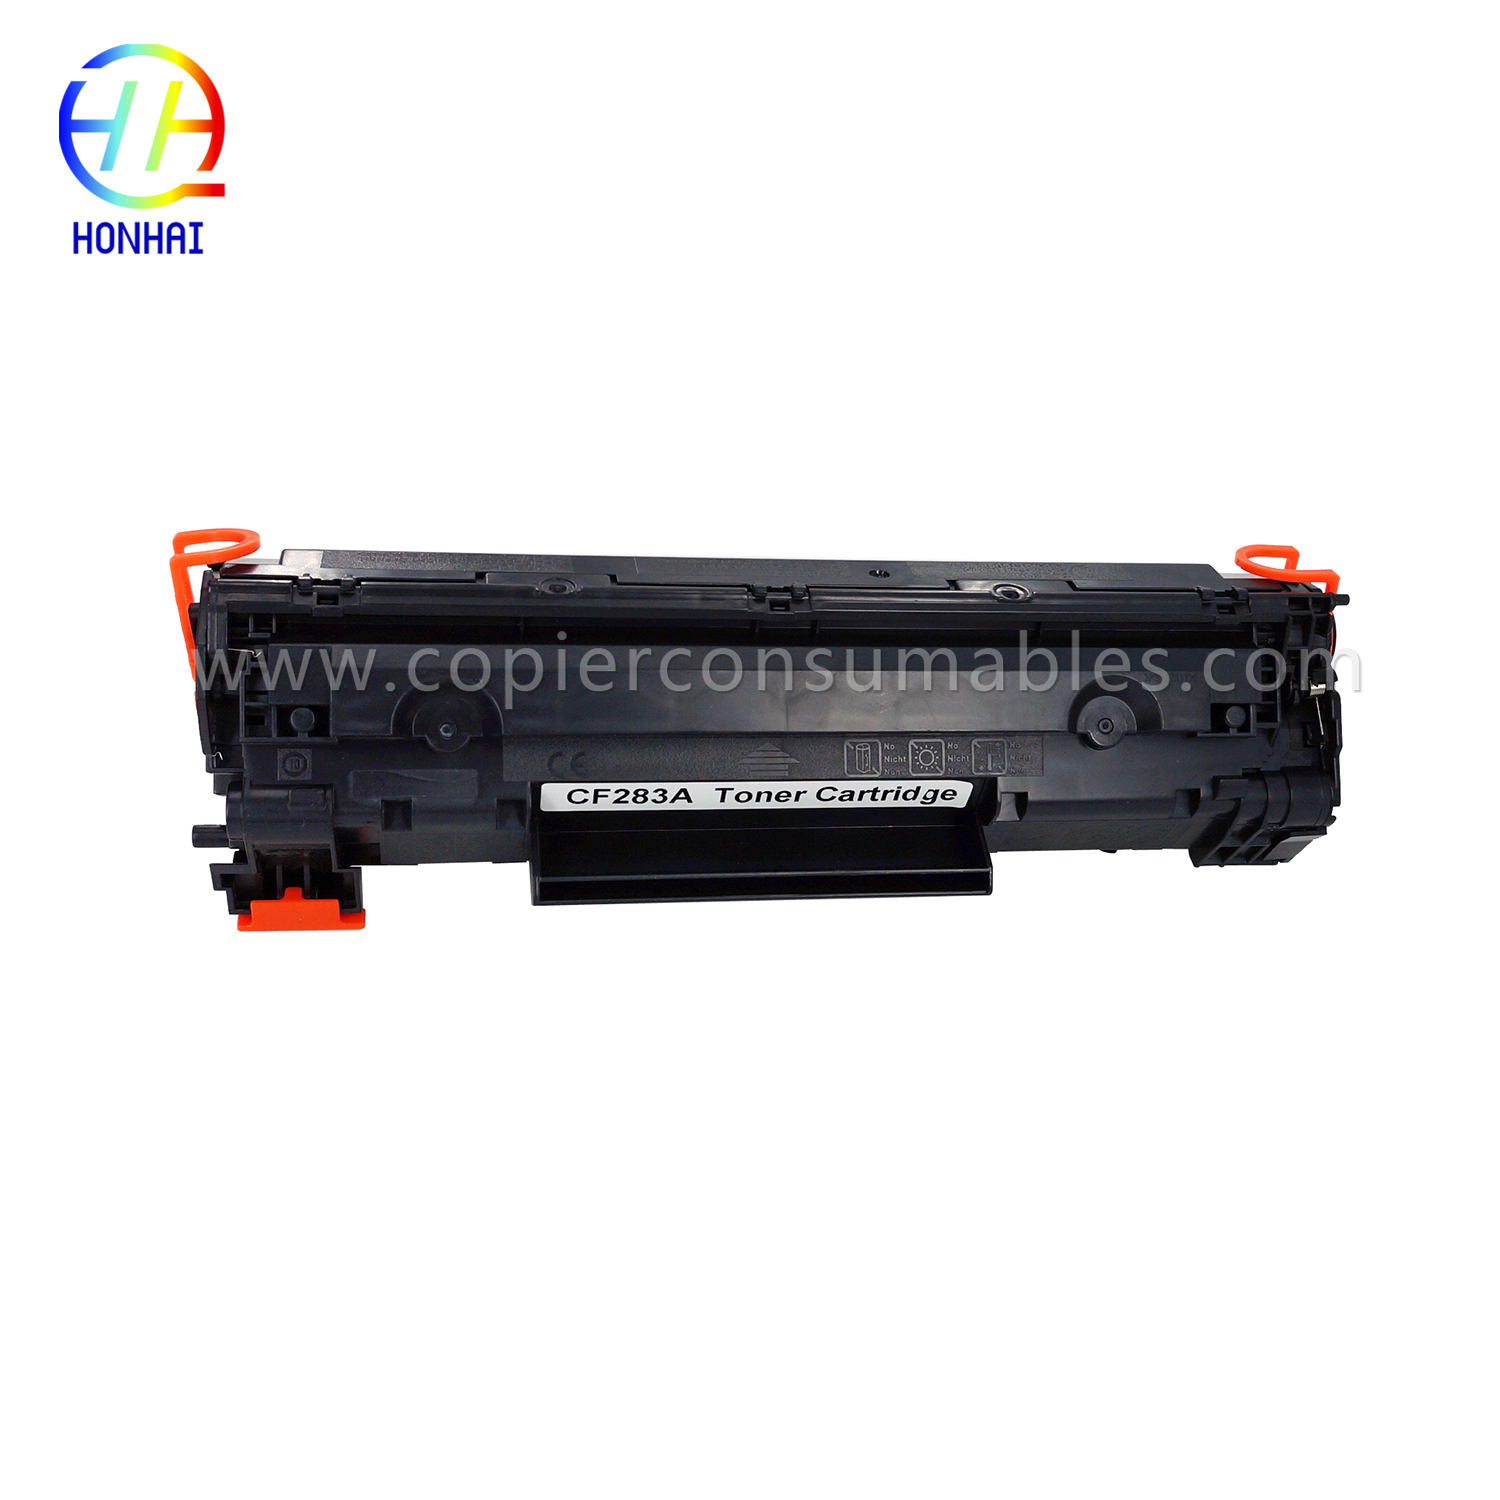 Toner Cartridge for HP LaserJet Pro M127MFP M201dw MFP M125nw M225dn M225dw CF283A 83A